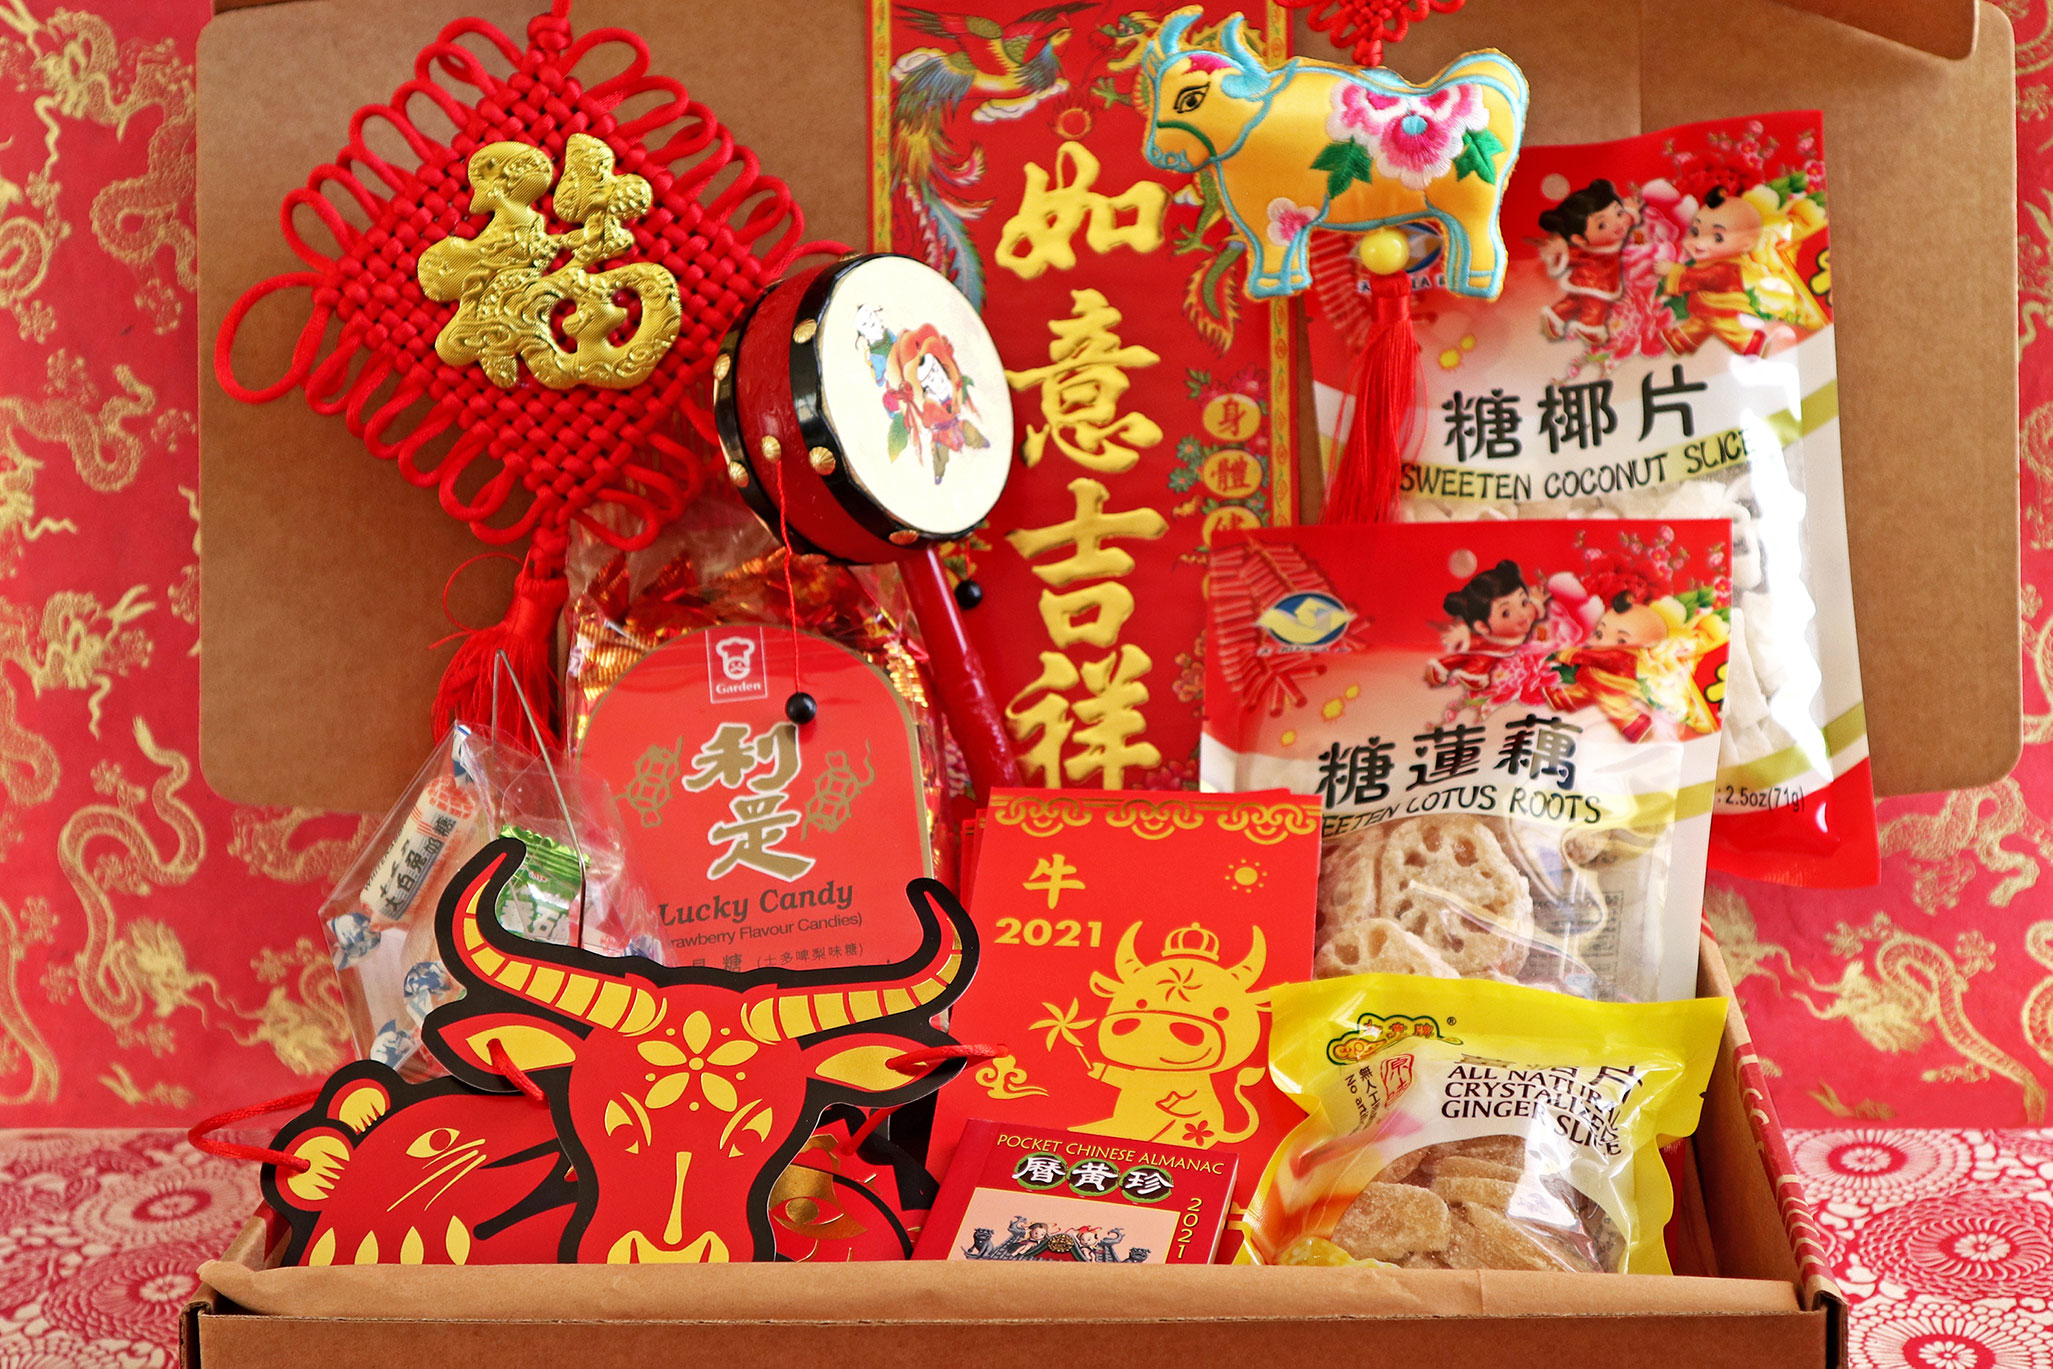 Lunar New Year Friendship Box by Pearl River Mart